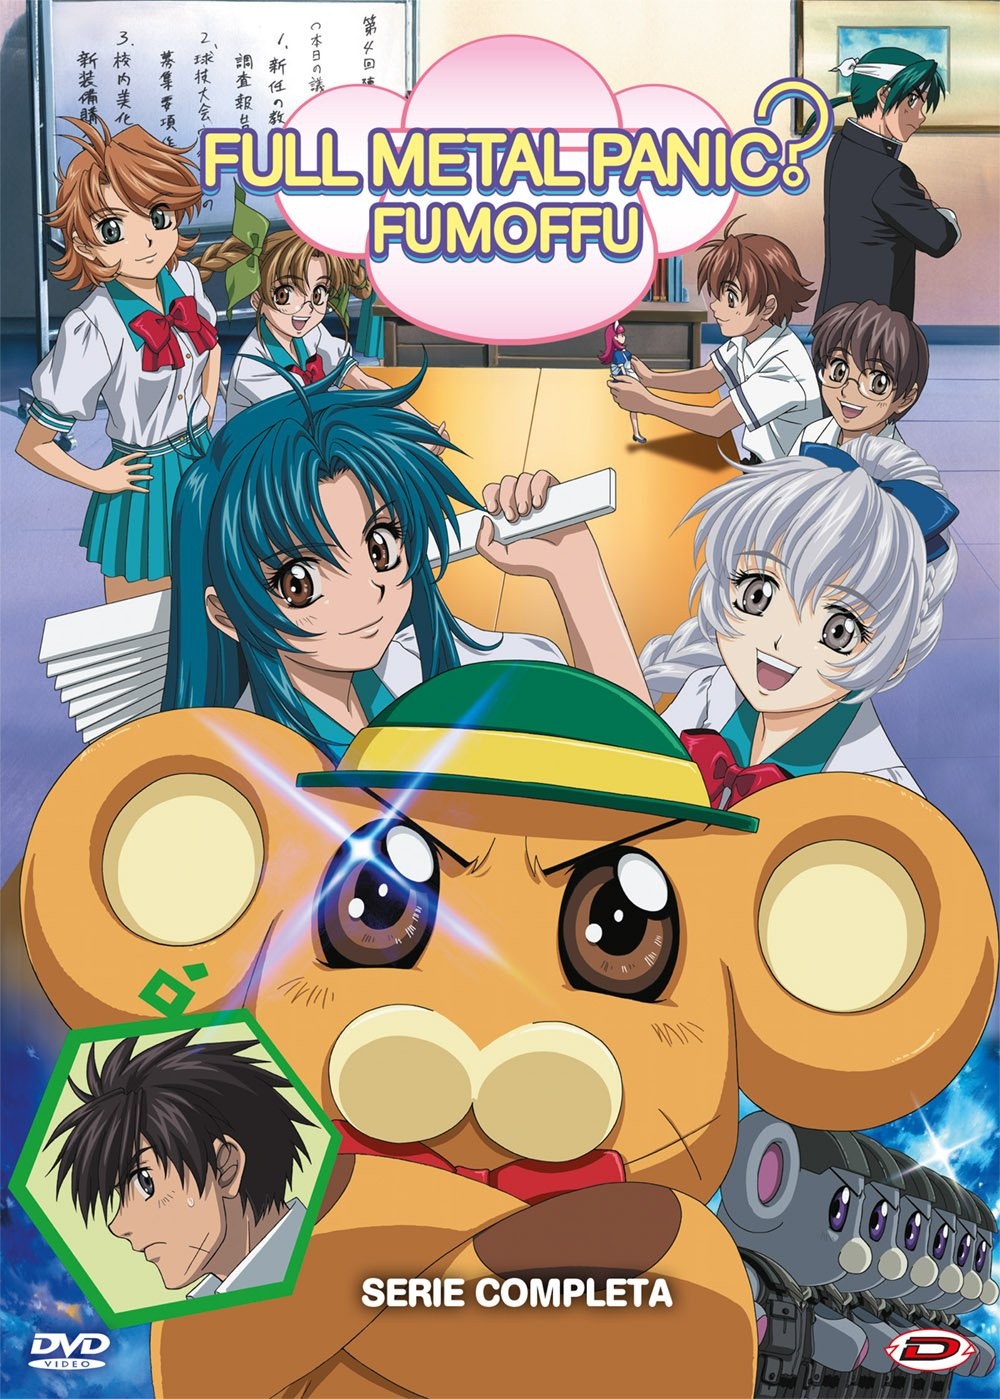 Full Metal Panic Fumoffu-The Complete Series (Eps 01-12) (3 DVD) [Import]